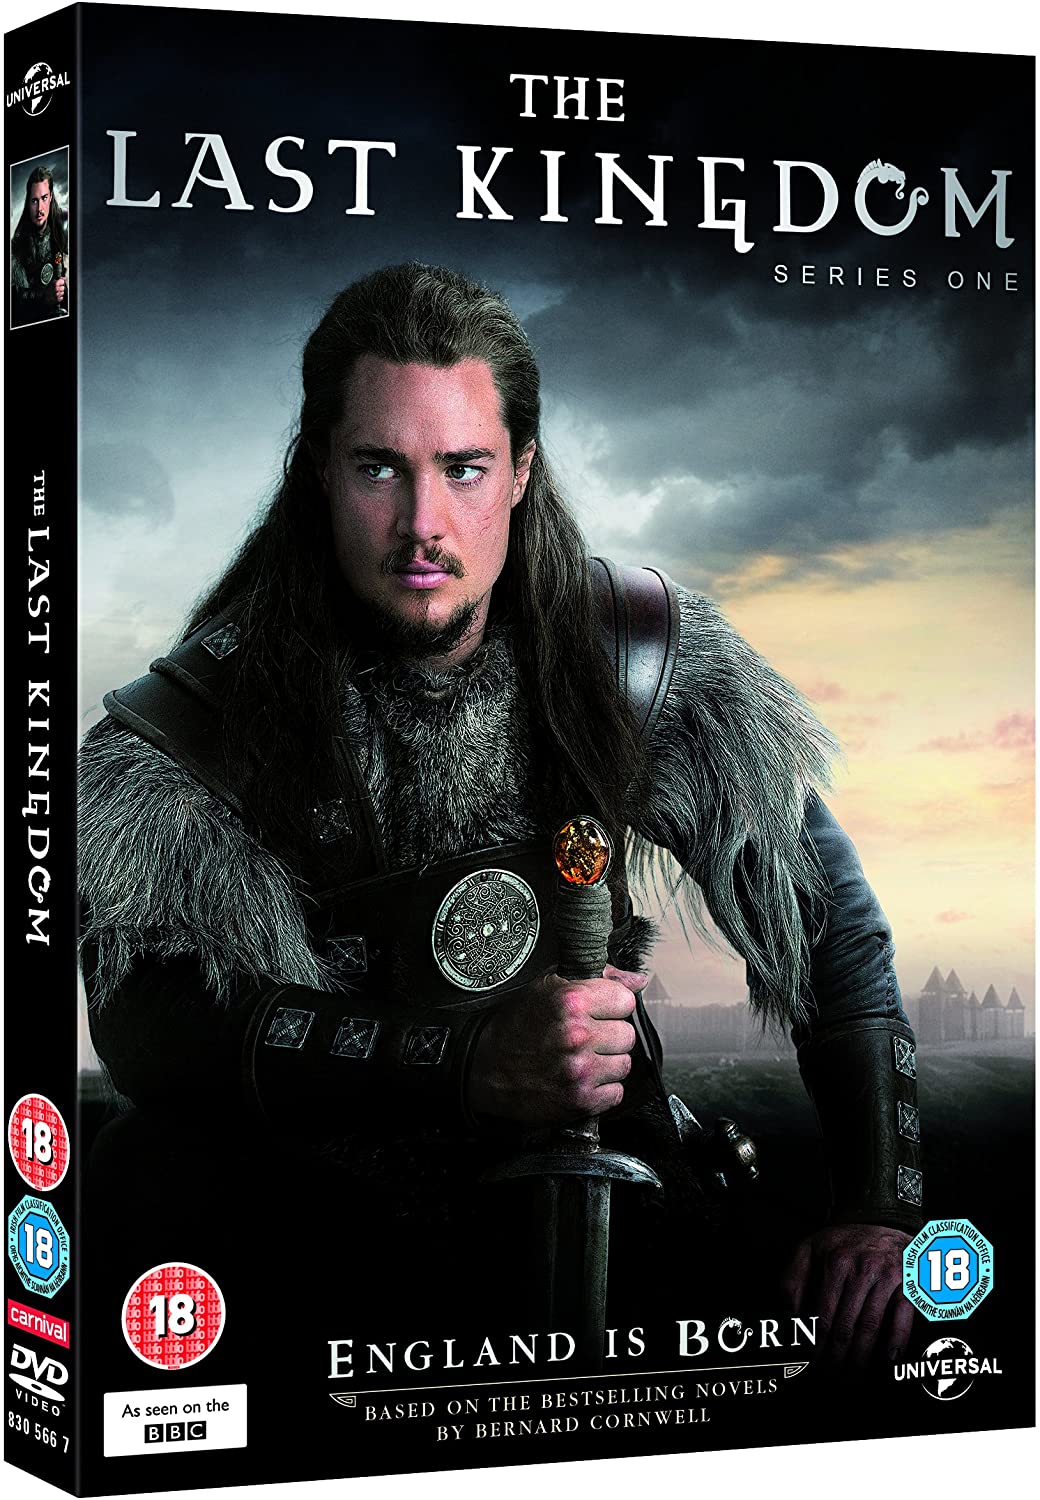 The Last Kingdom - Series One " Set" [DVD]